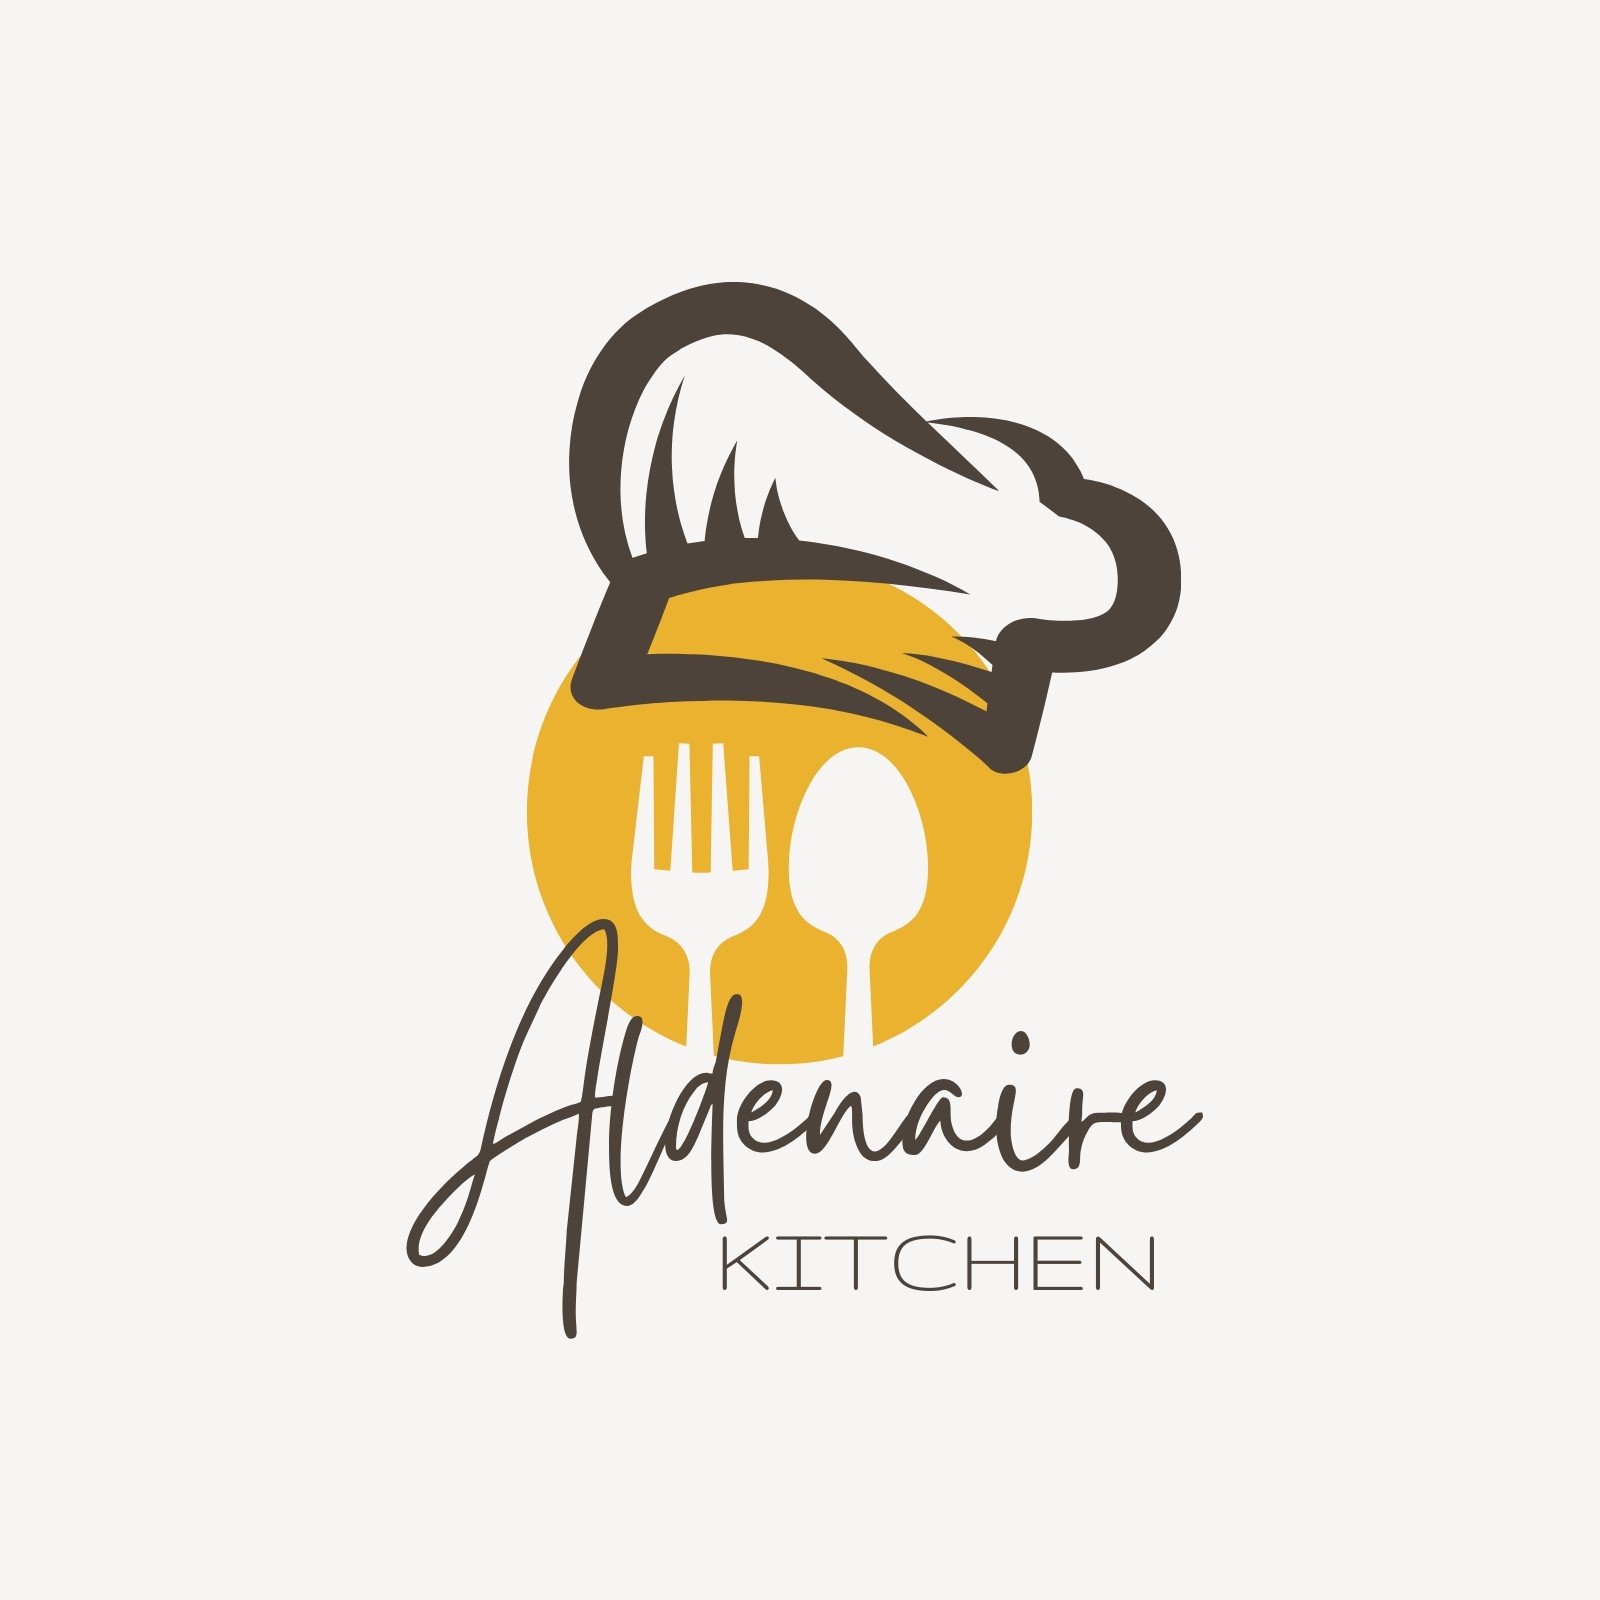 Kitchen Logo by Sovana Siddika on Dribbble